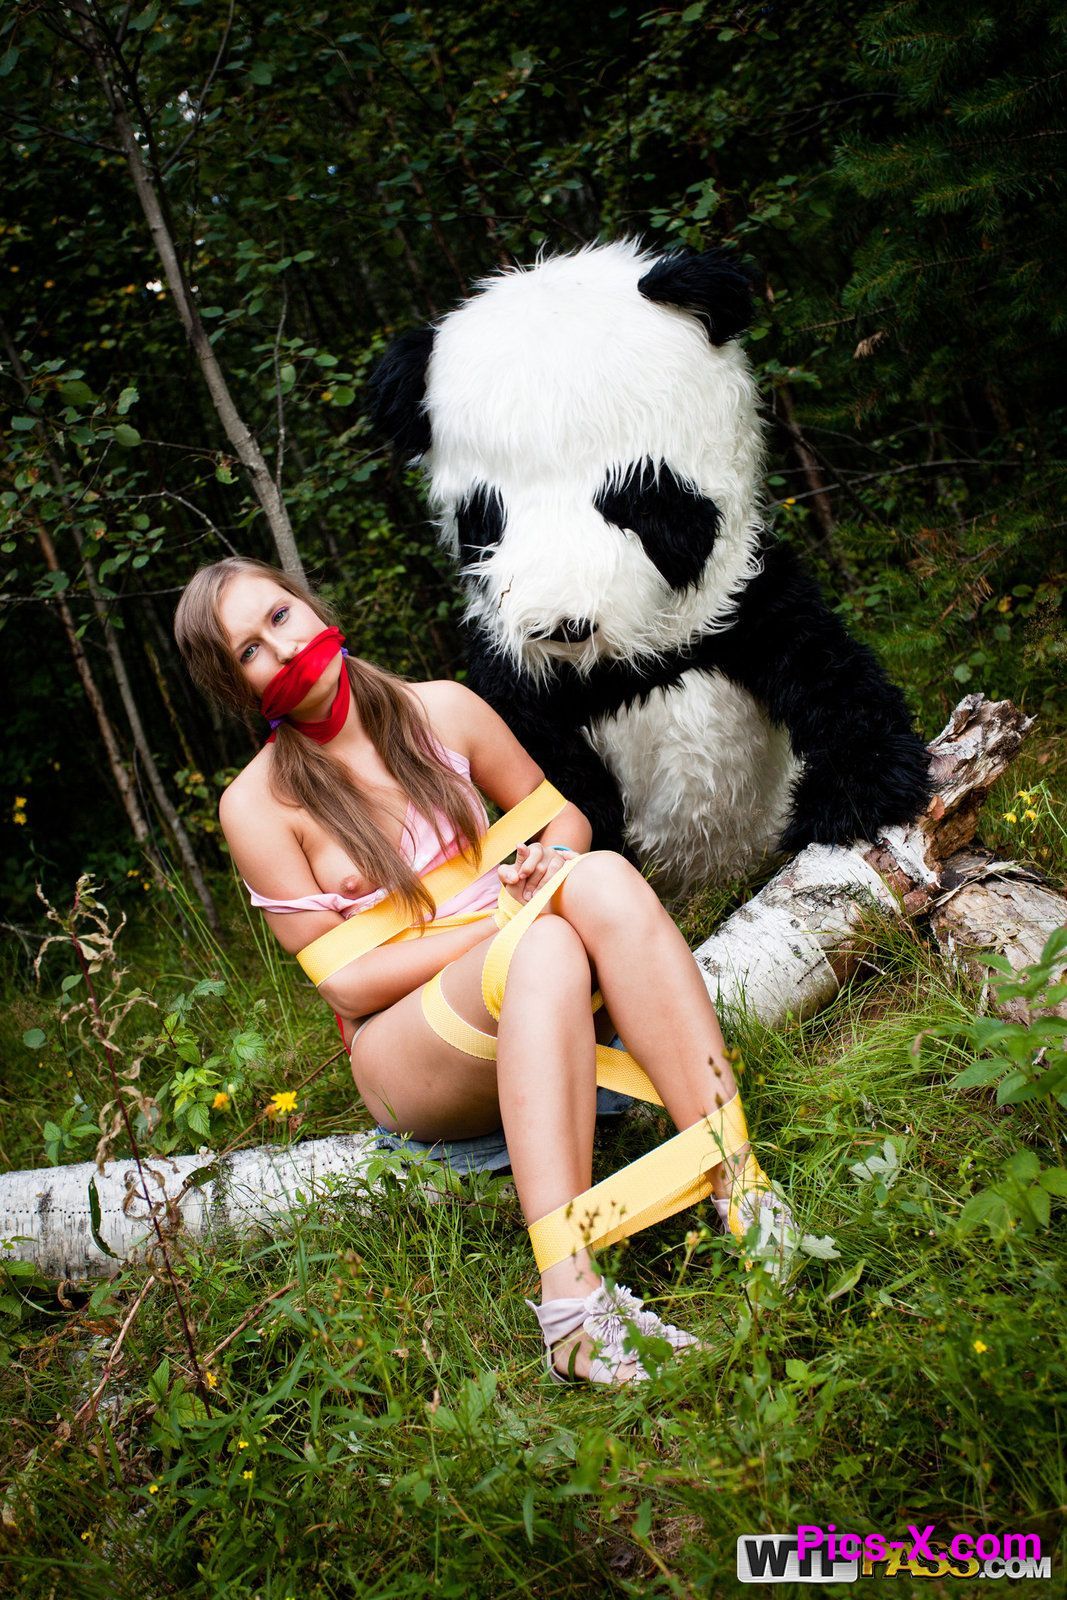 Wild sex to award a hero panda - Panda Fuck - Image 6